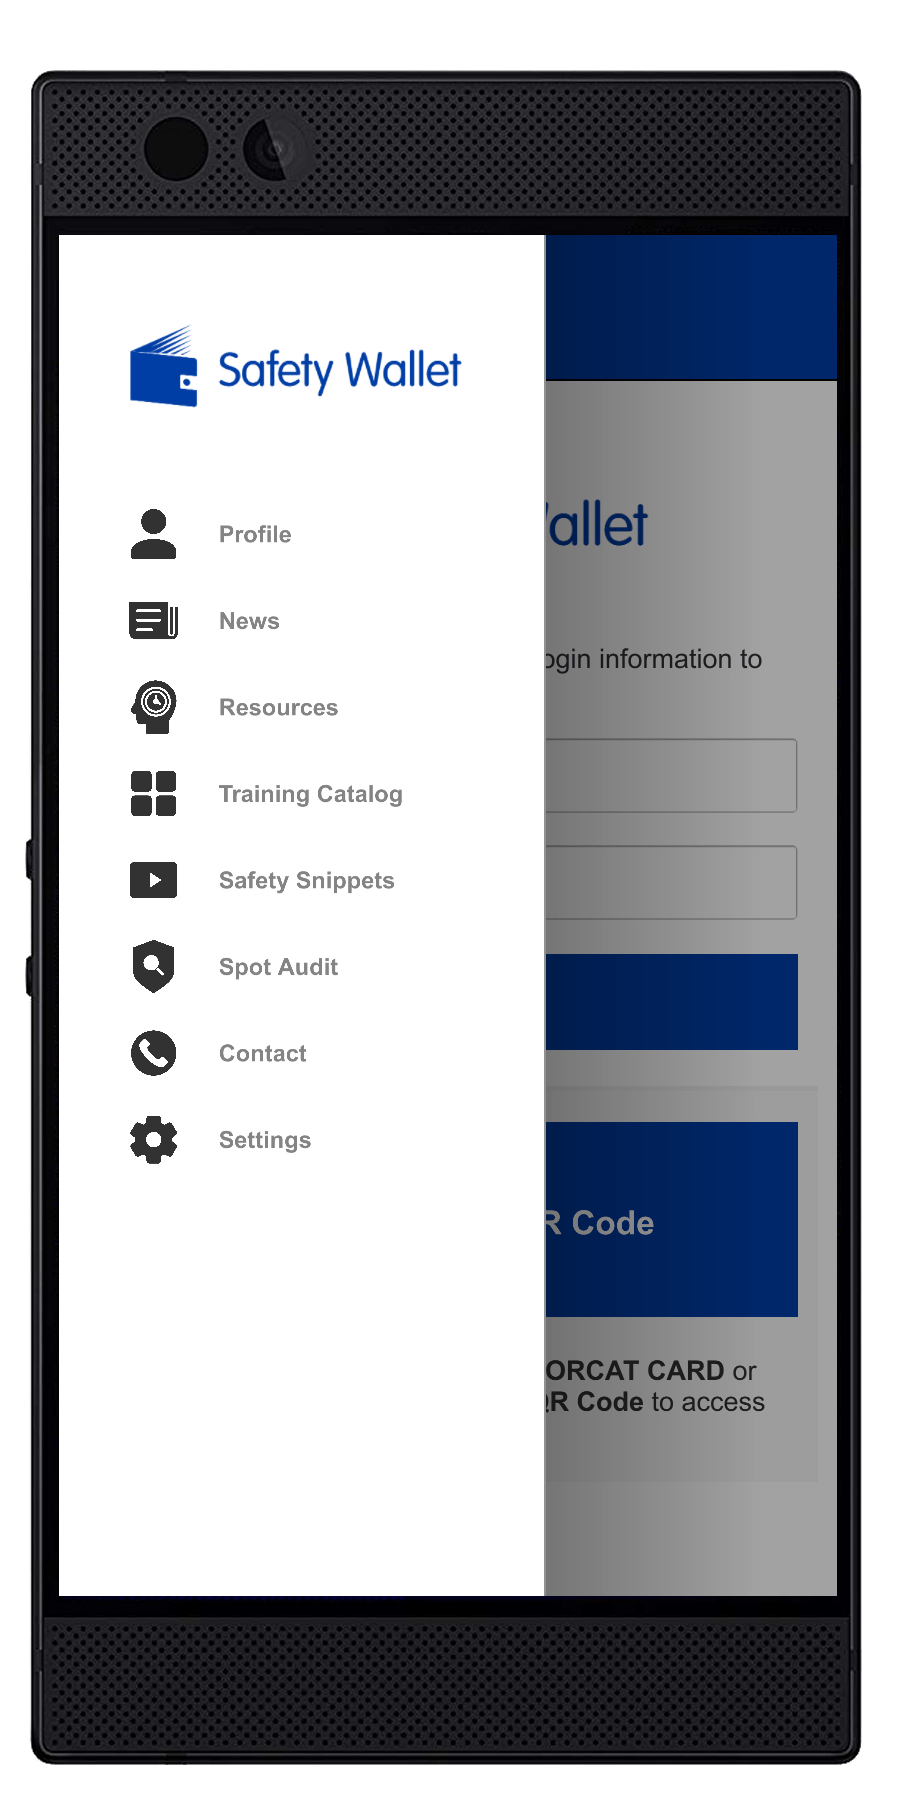 Safety Wallet App Menu Screenshot